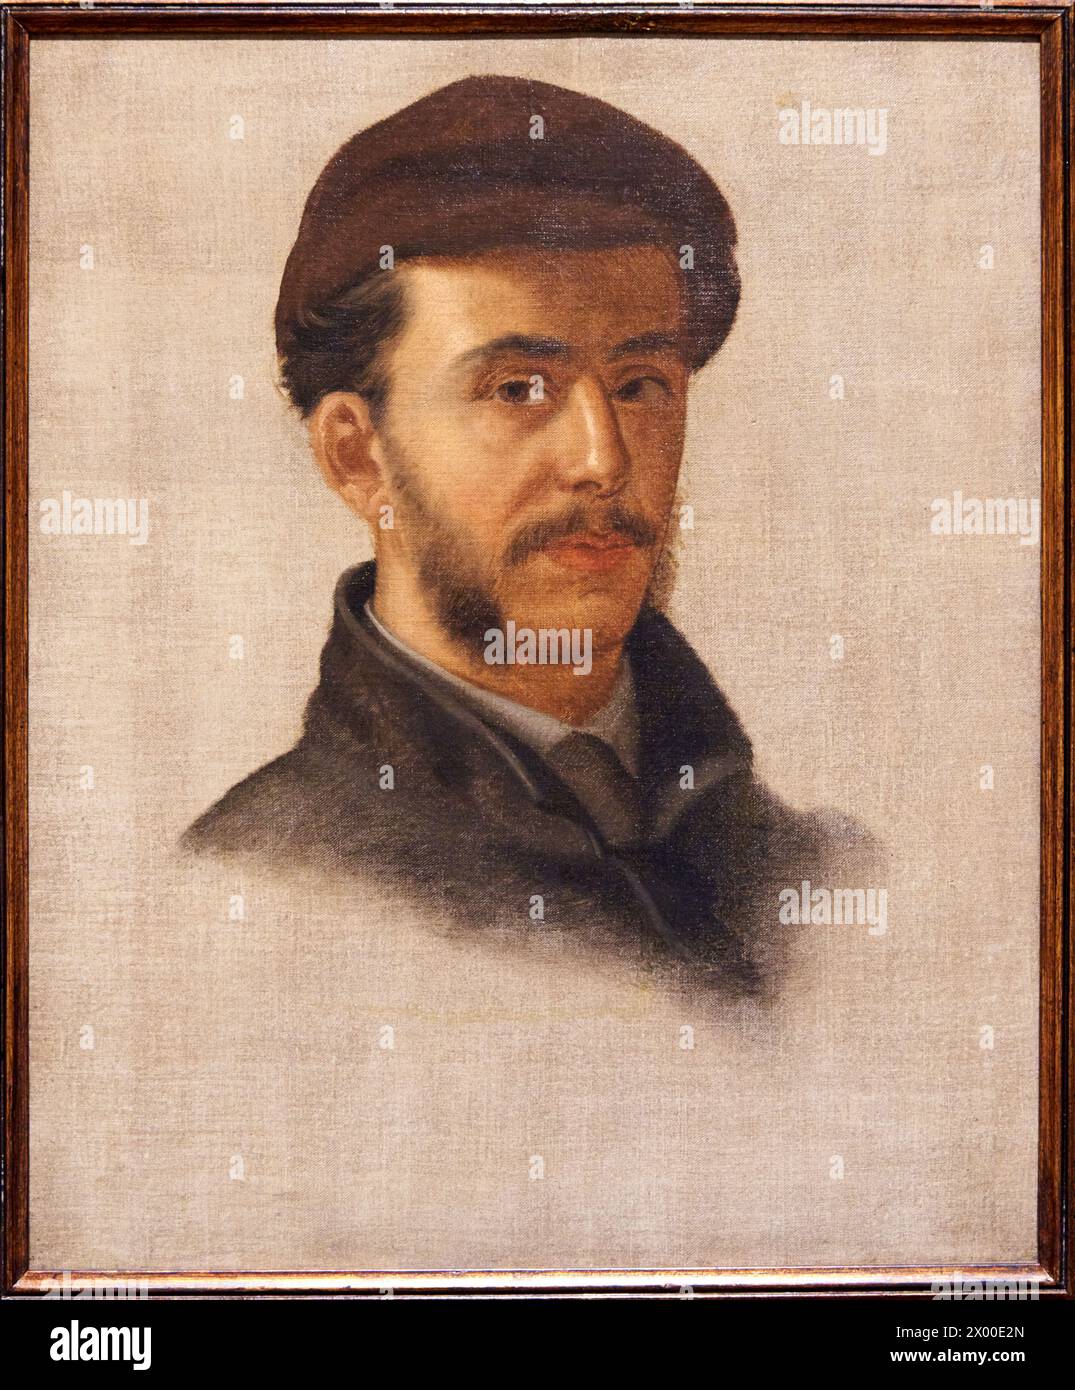 Manuel Fernández Escandón. (Limoges, France, 1844 - Oviedo, 1897), Self-portrait, c. 1870-1875, Fine Arts Museum, Museo Bellas Artes, Oviedo, Asturias, Spain. Stock Photo